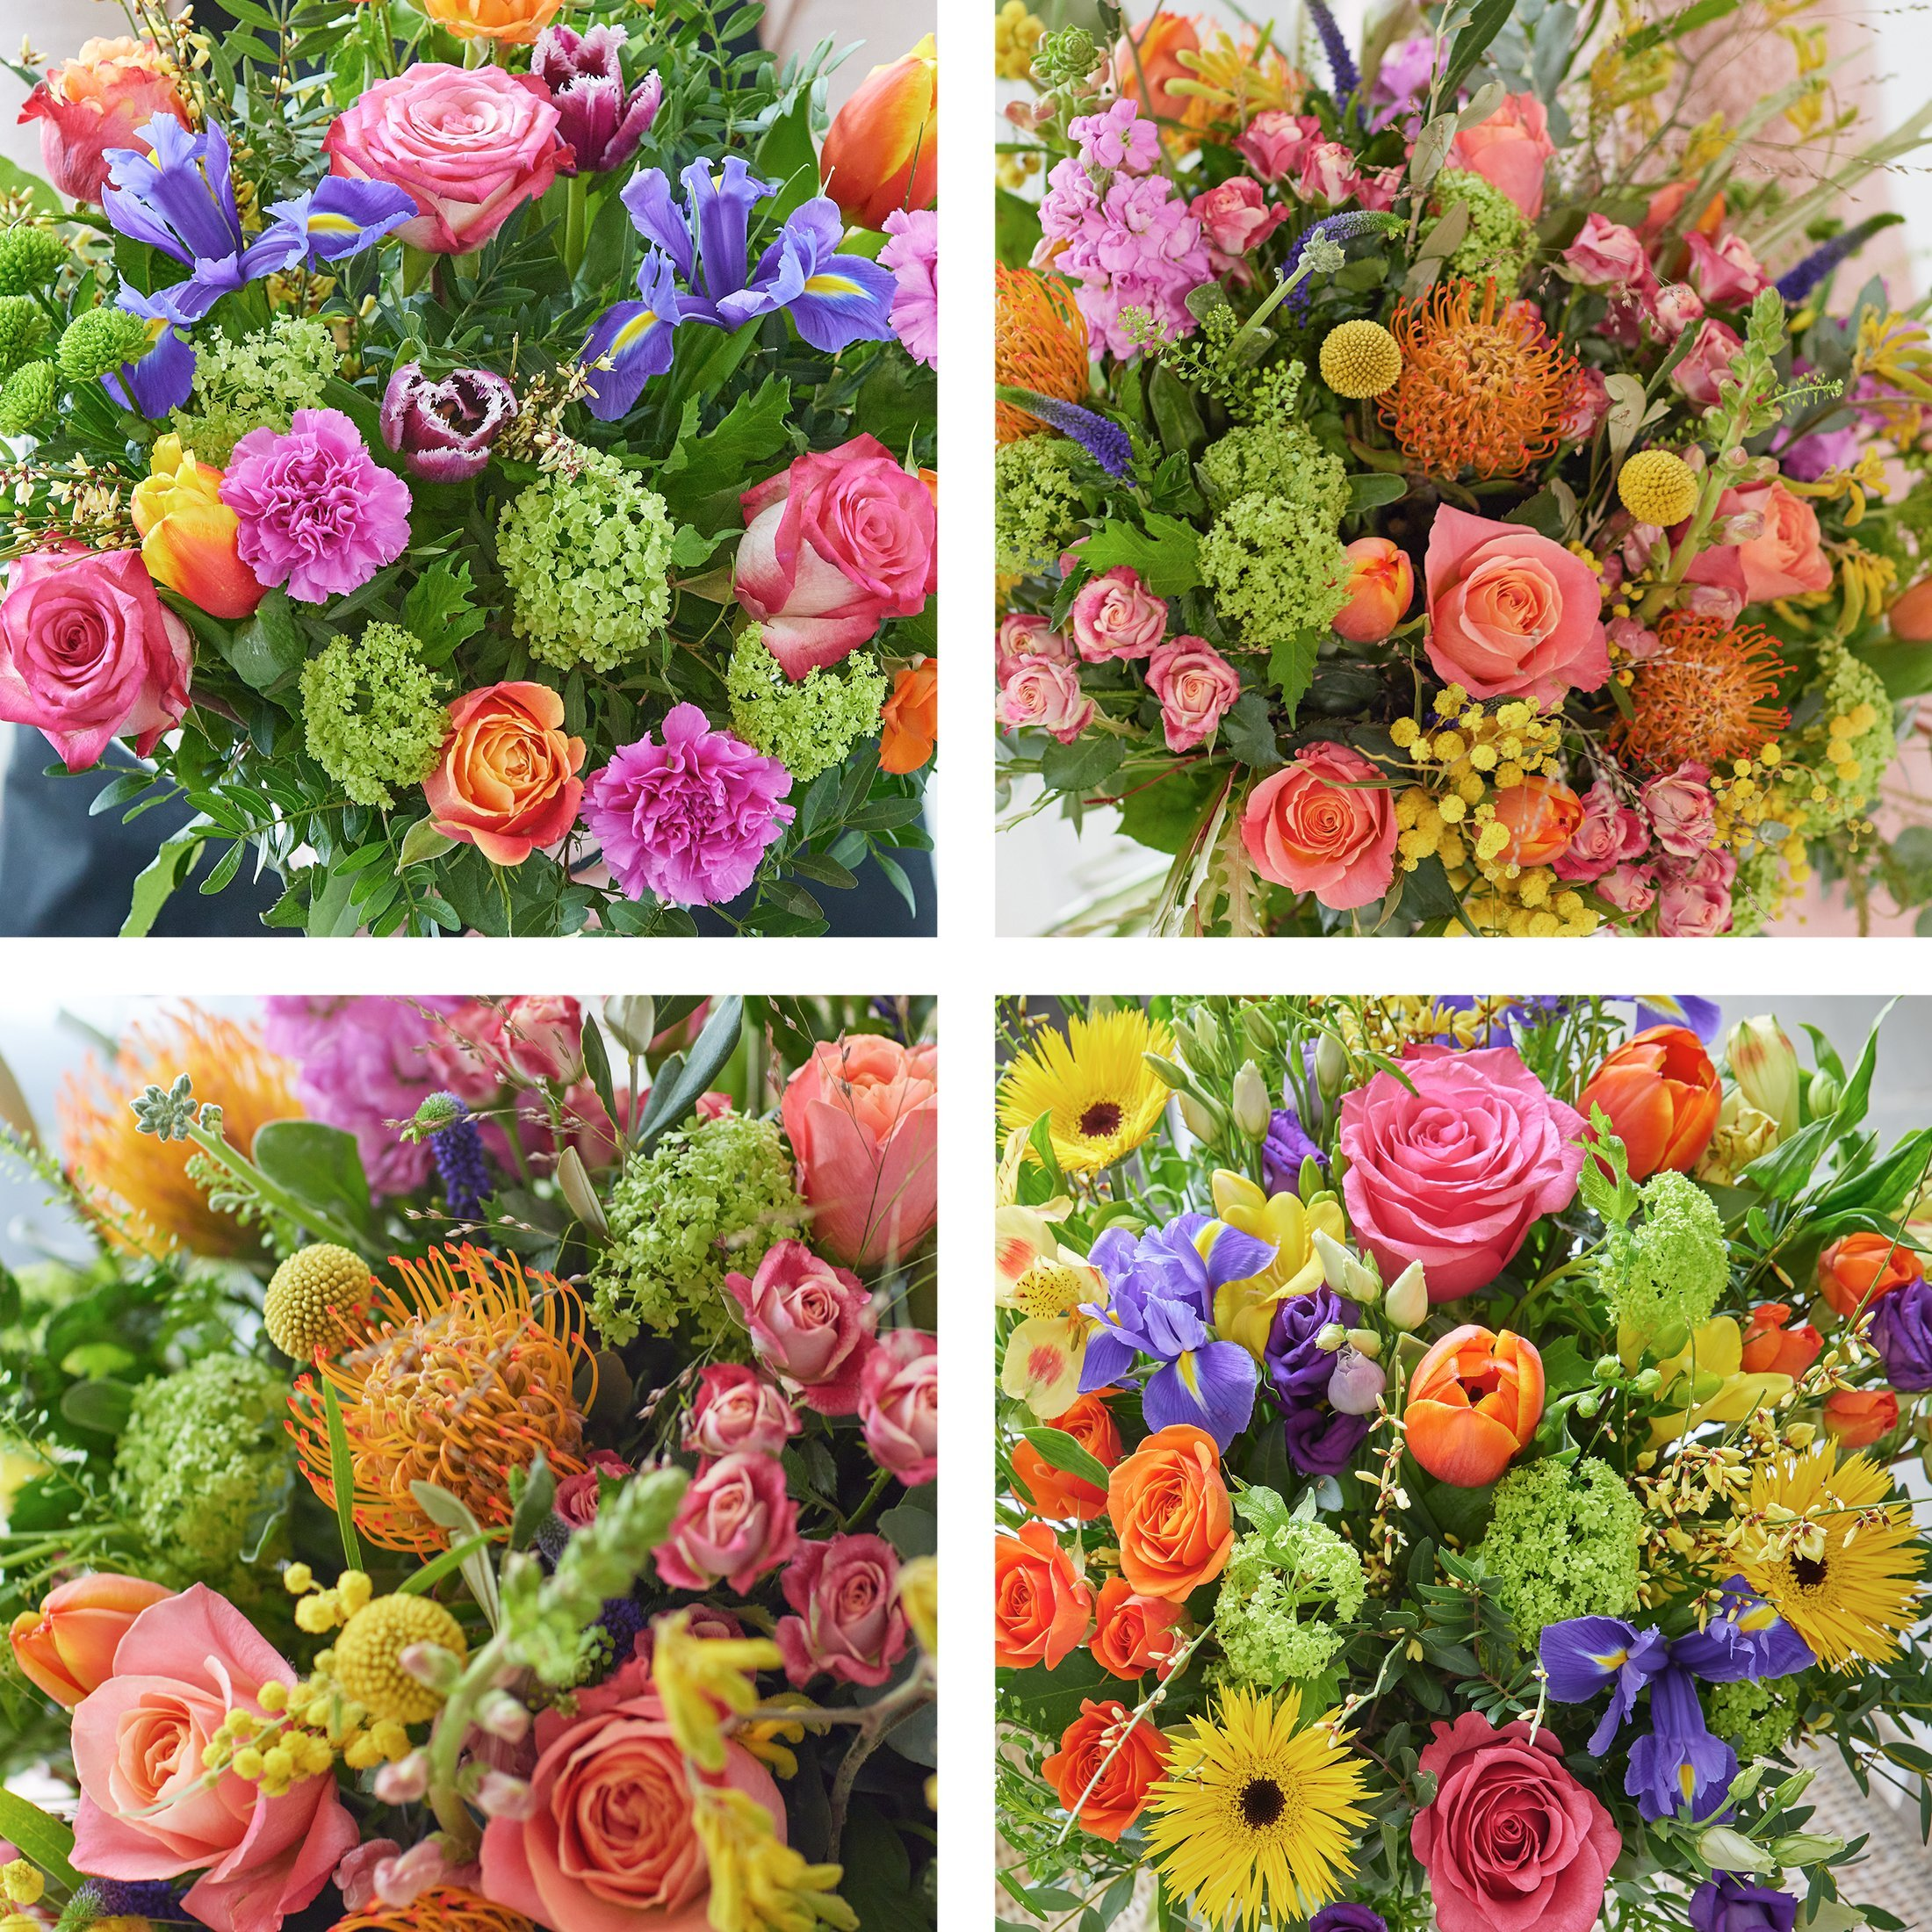 Spain - Send flowers to Spain from the UK | Interflora | Interflora